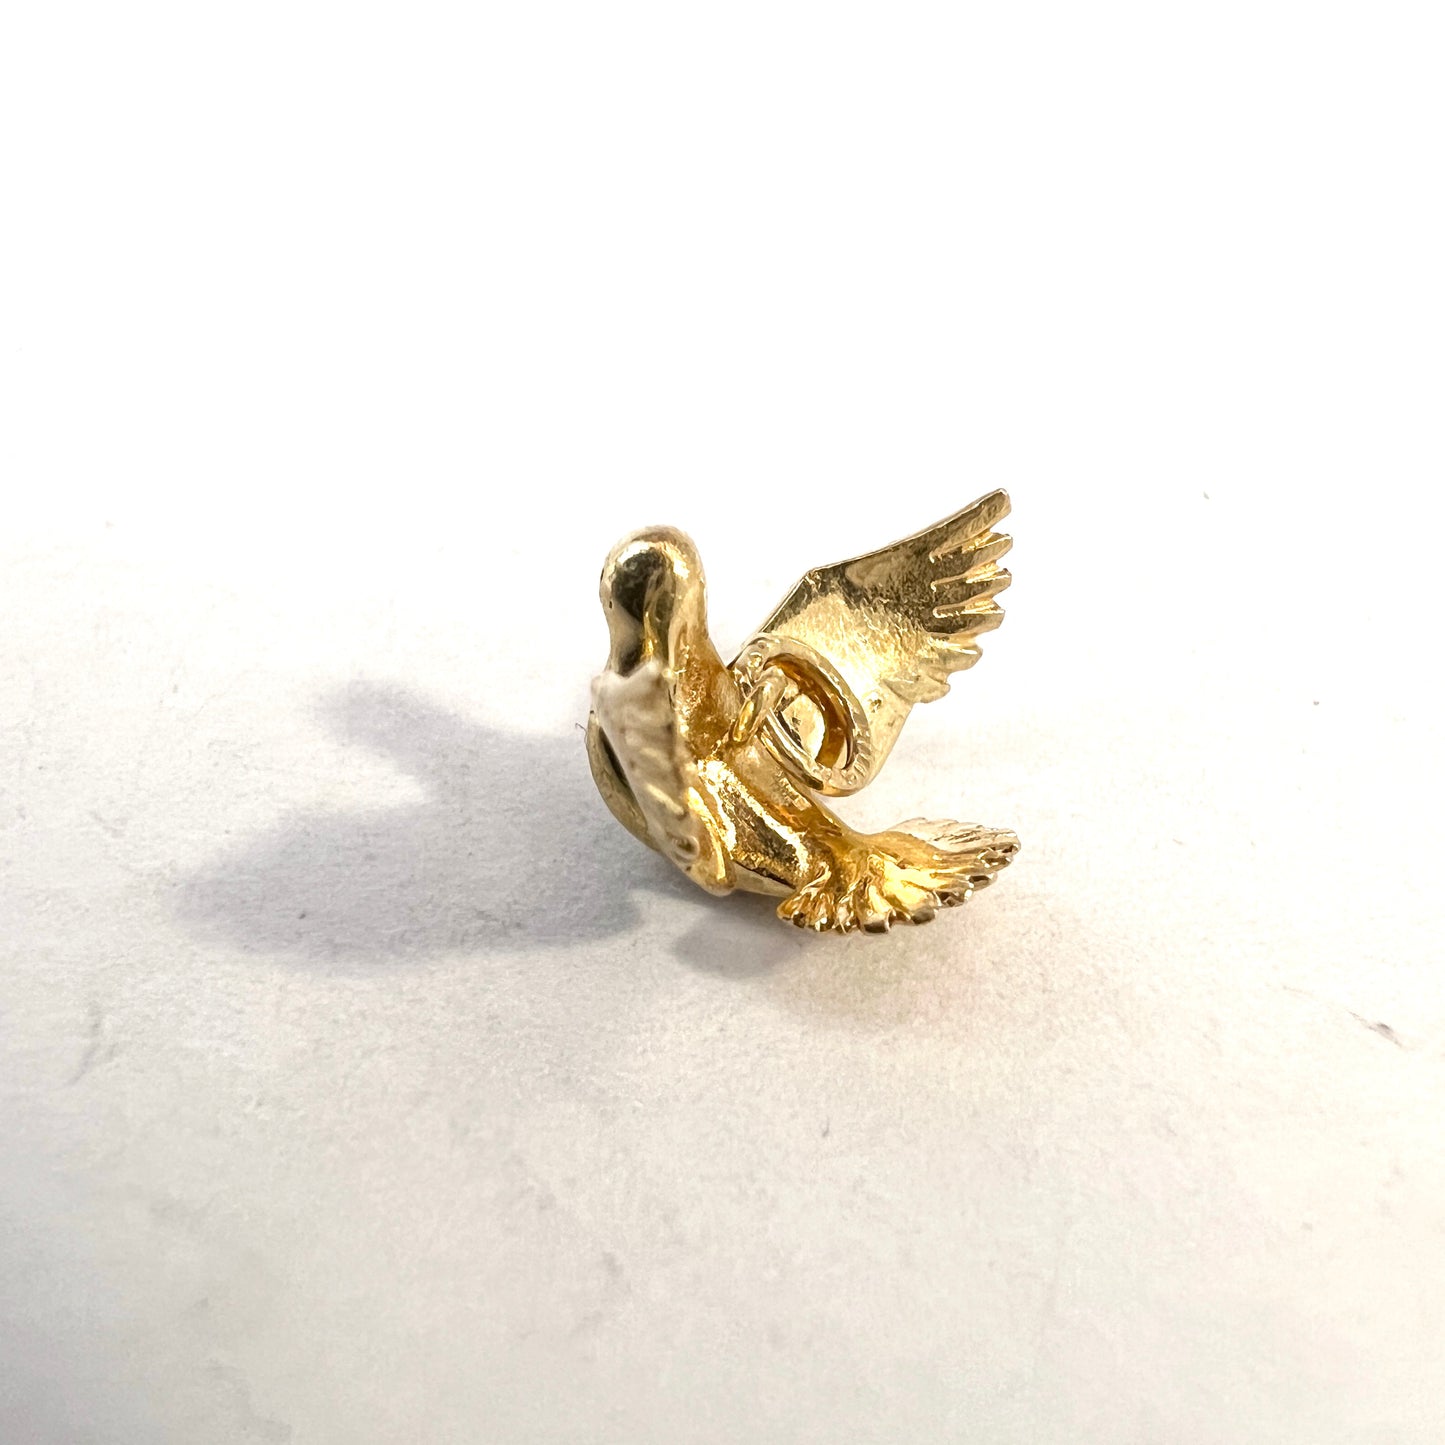 Robbert, Sweden 1950s. Vintage 18k Gold Peace Dove Charm Pendant. Signed